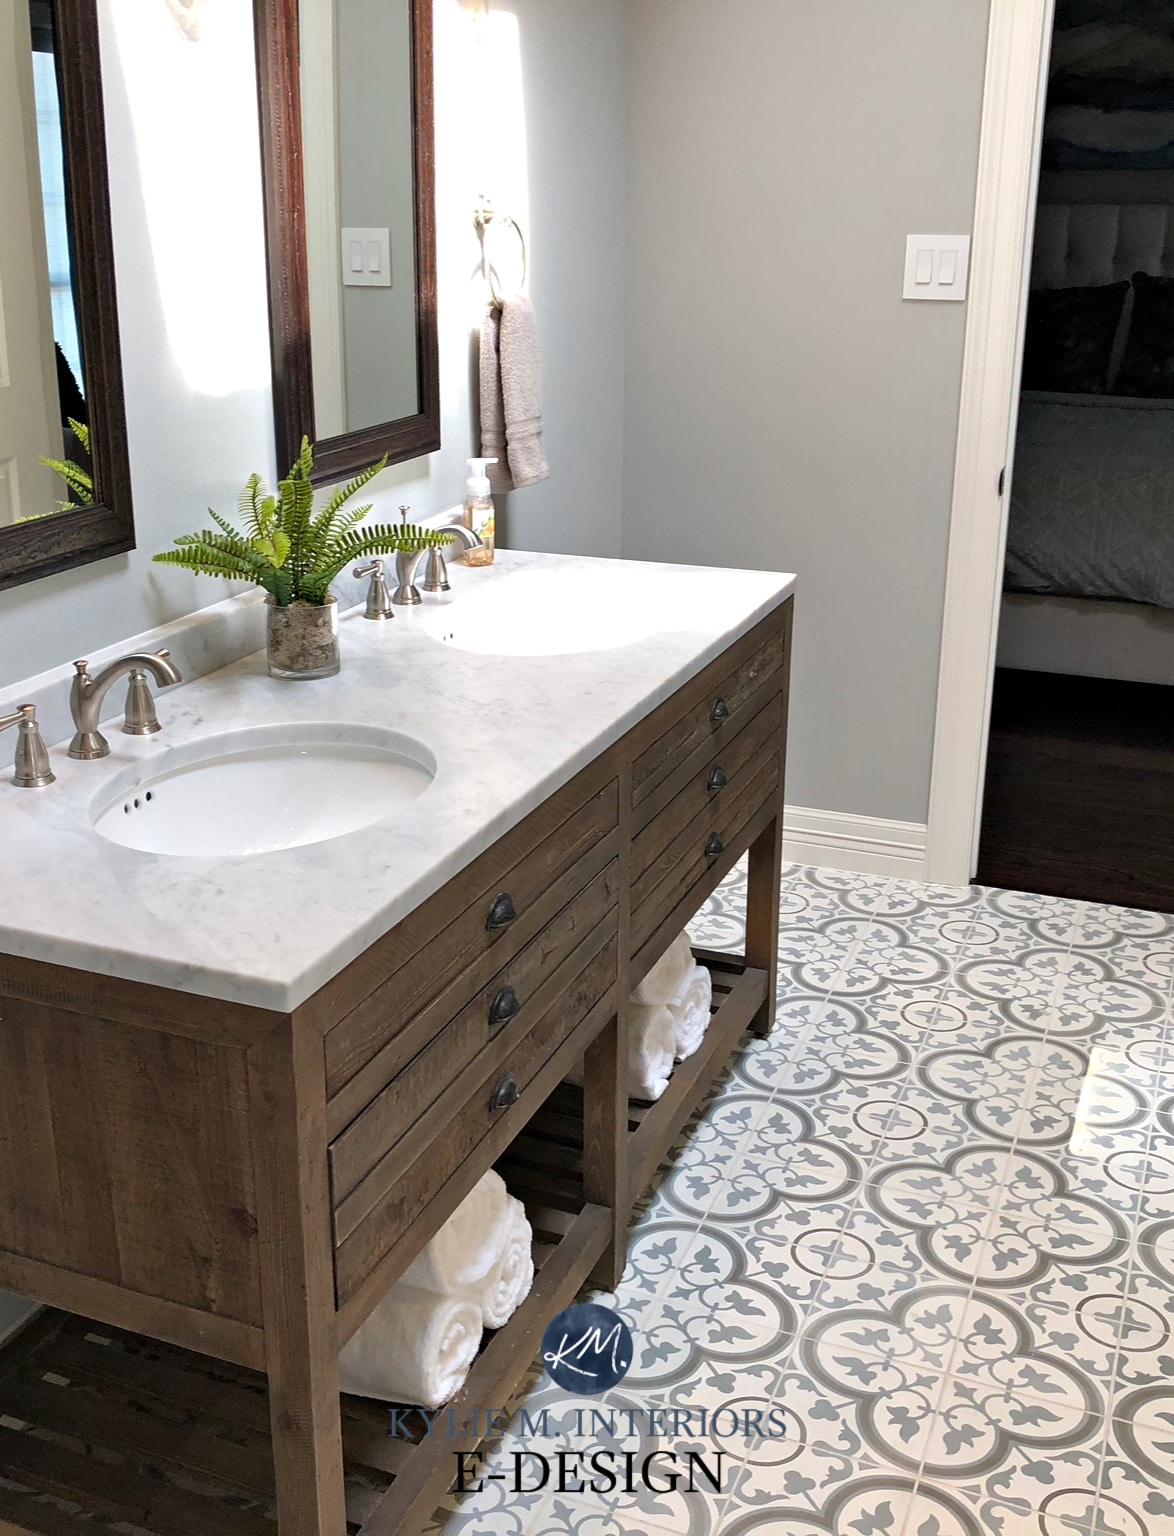 Bathroom remodel. Kylie M Interiors Edesign, paint color consultant. Sherwin Williams Argos, Restoration Hardware vanity, cement patterned floor tile